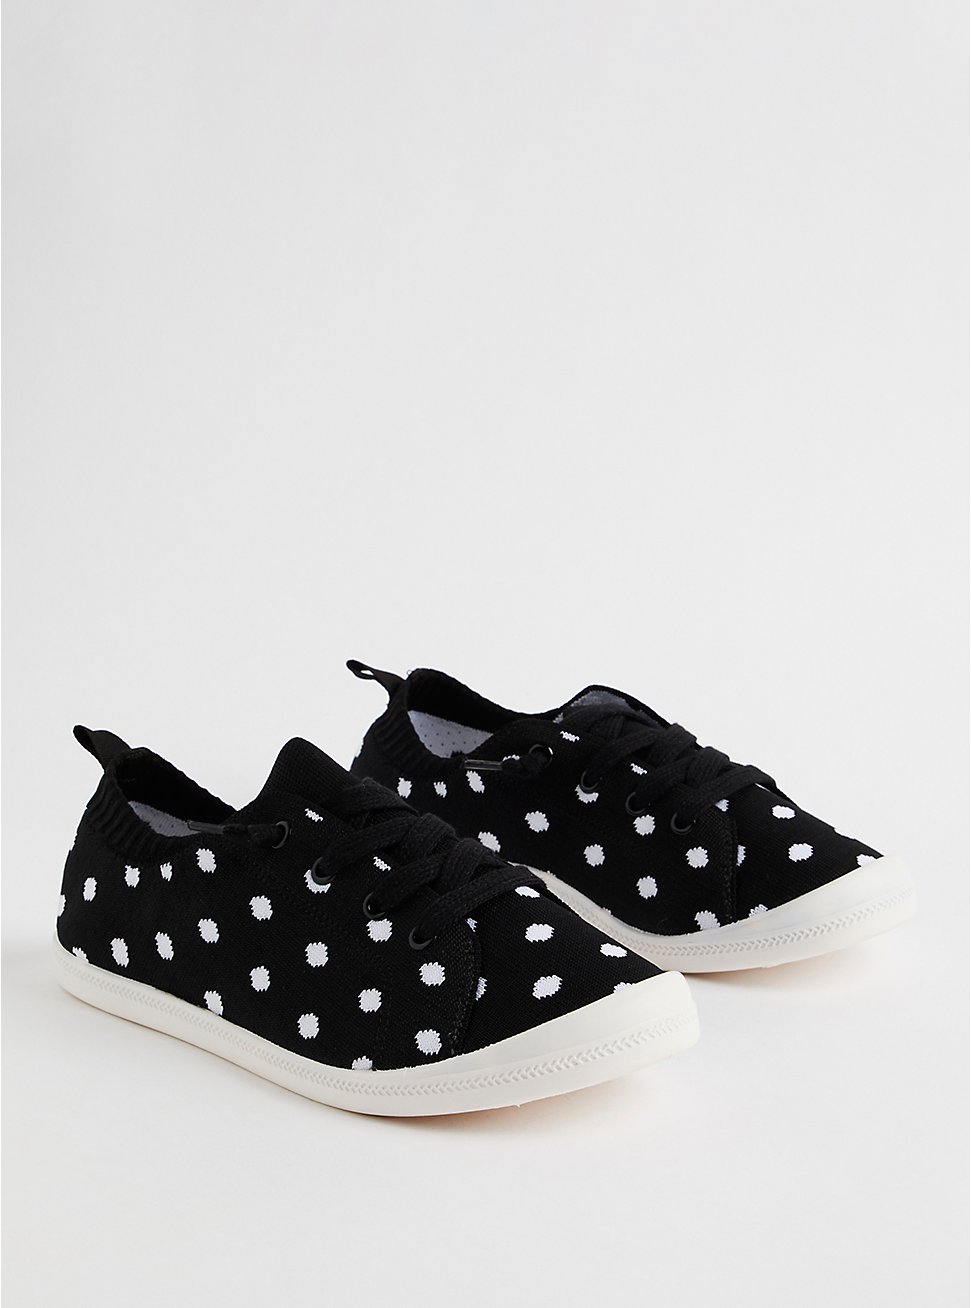 Plus Size Riley Sneaker - Canvas Polka Dot Black (WW), BLACK, hi-res